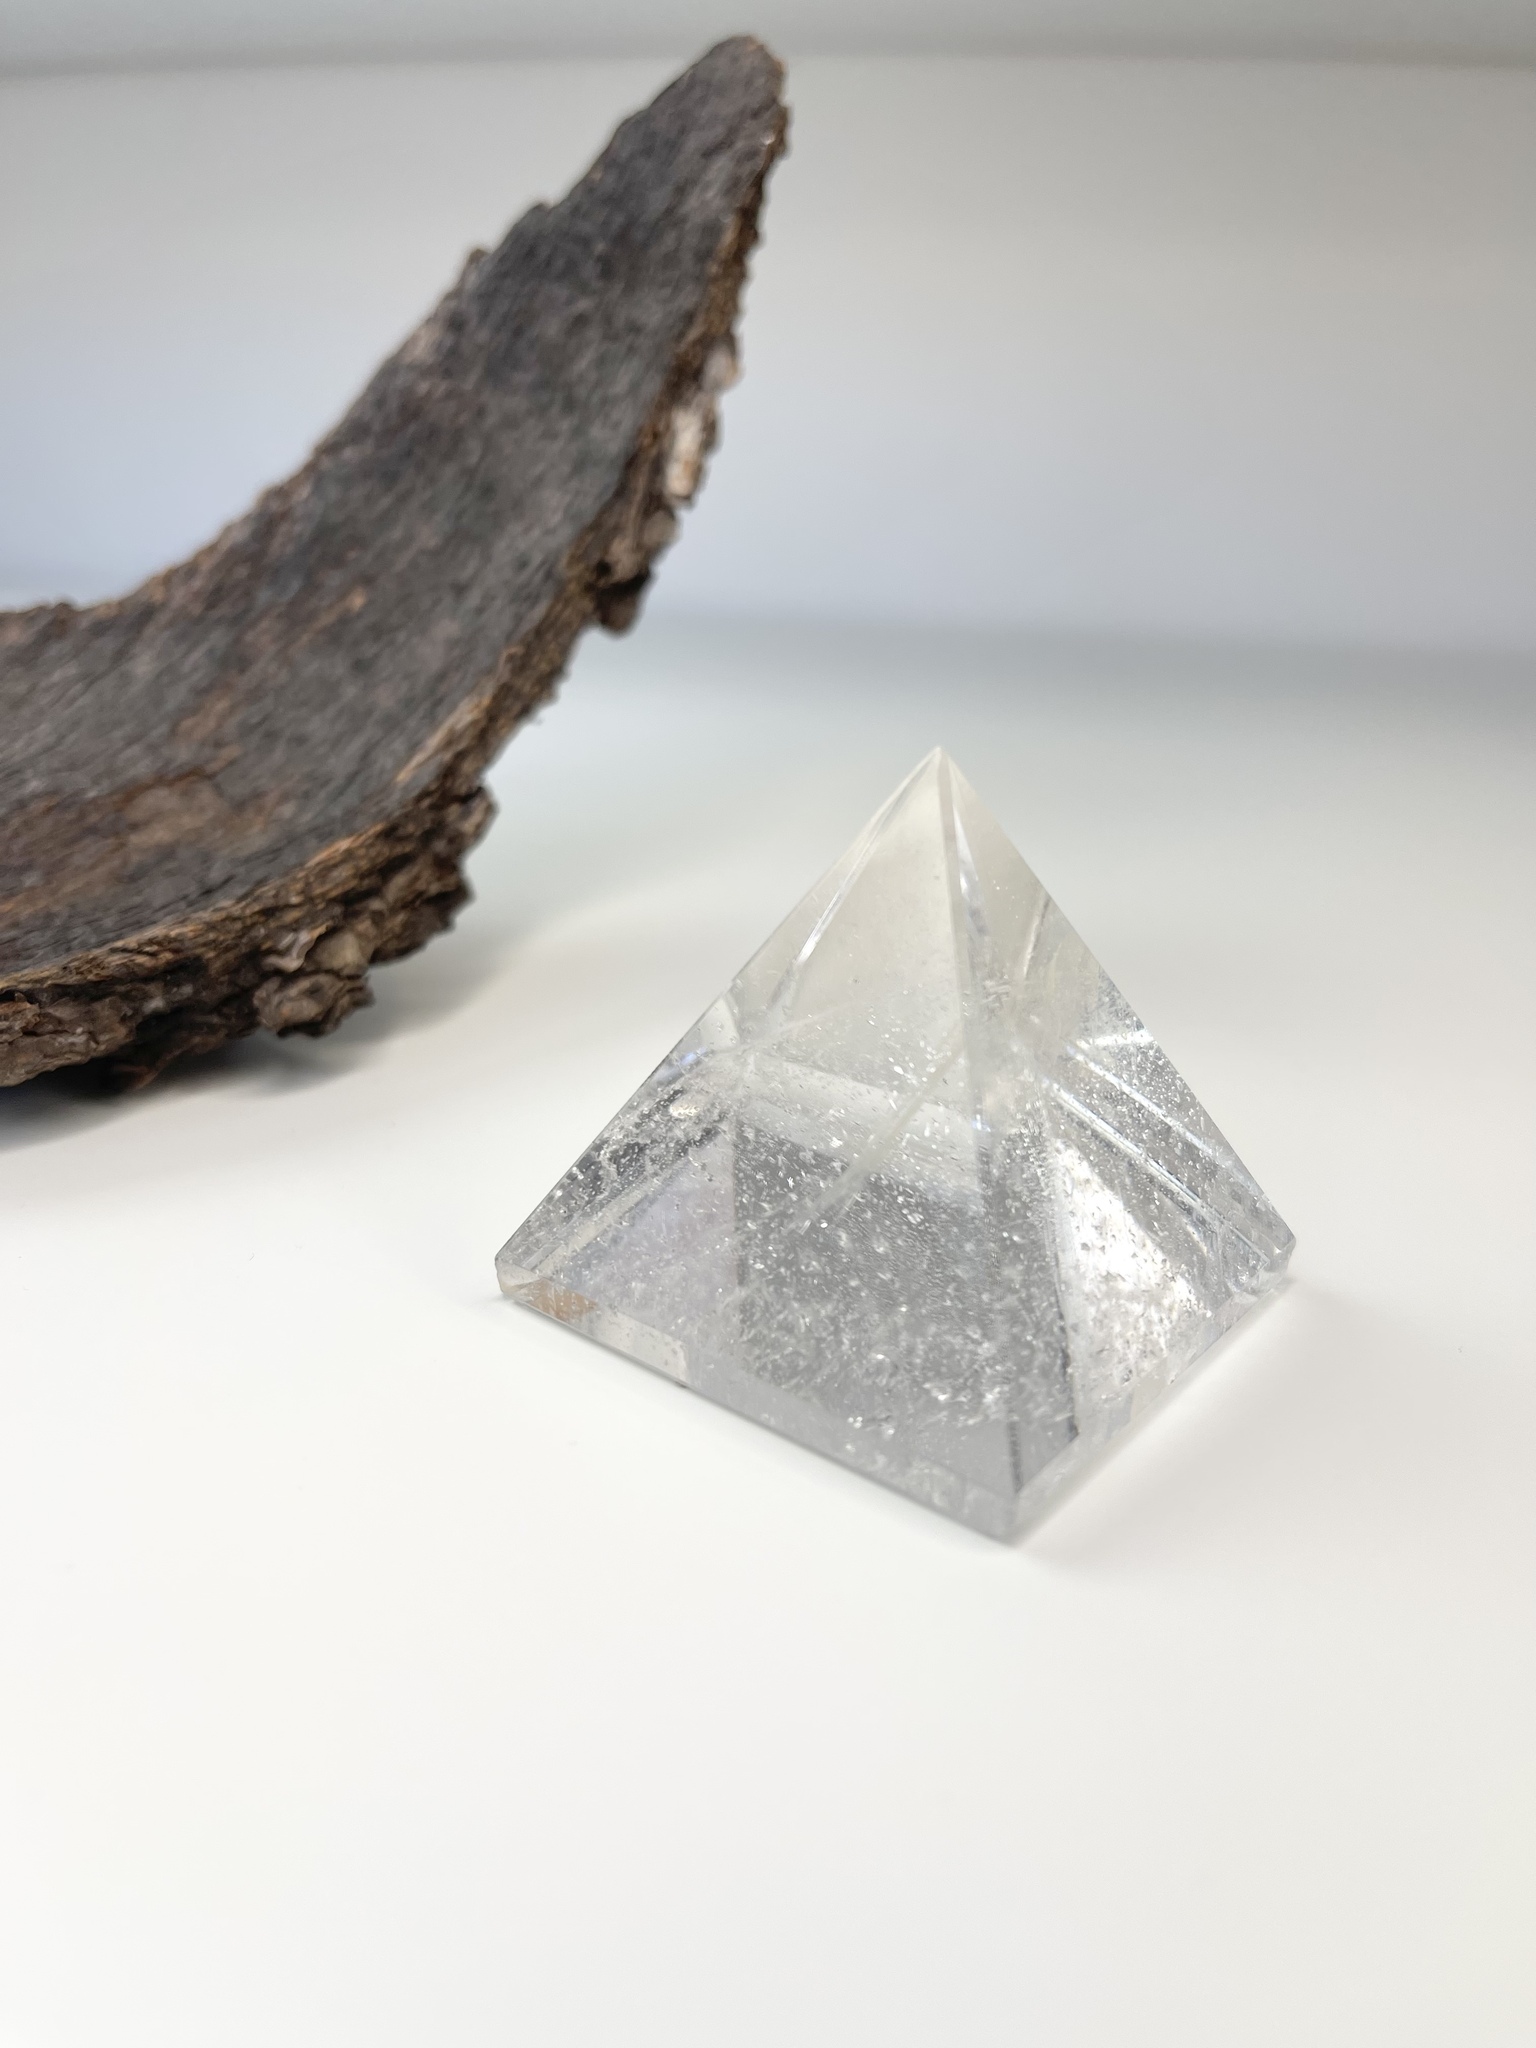 Bergkristall (clear quartz), pyramid